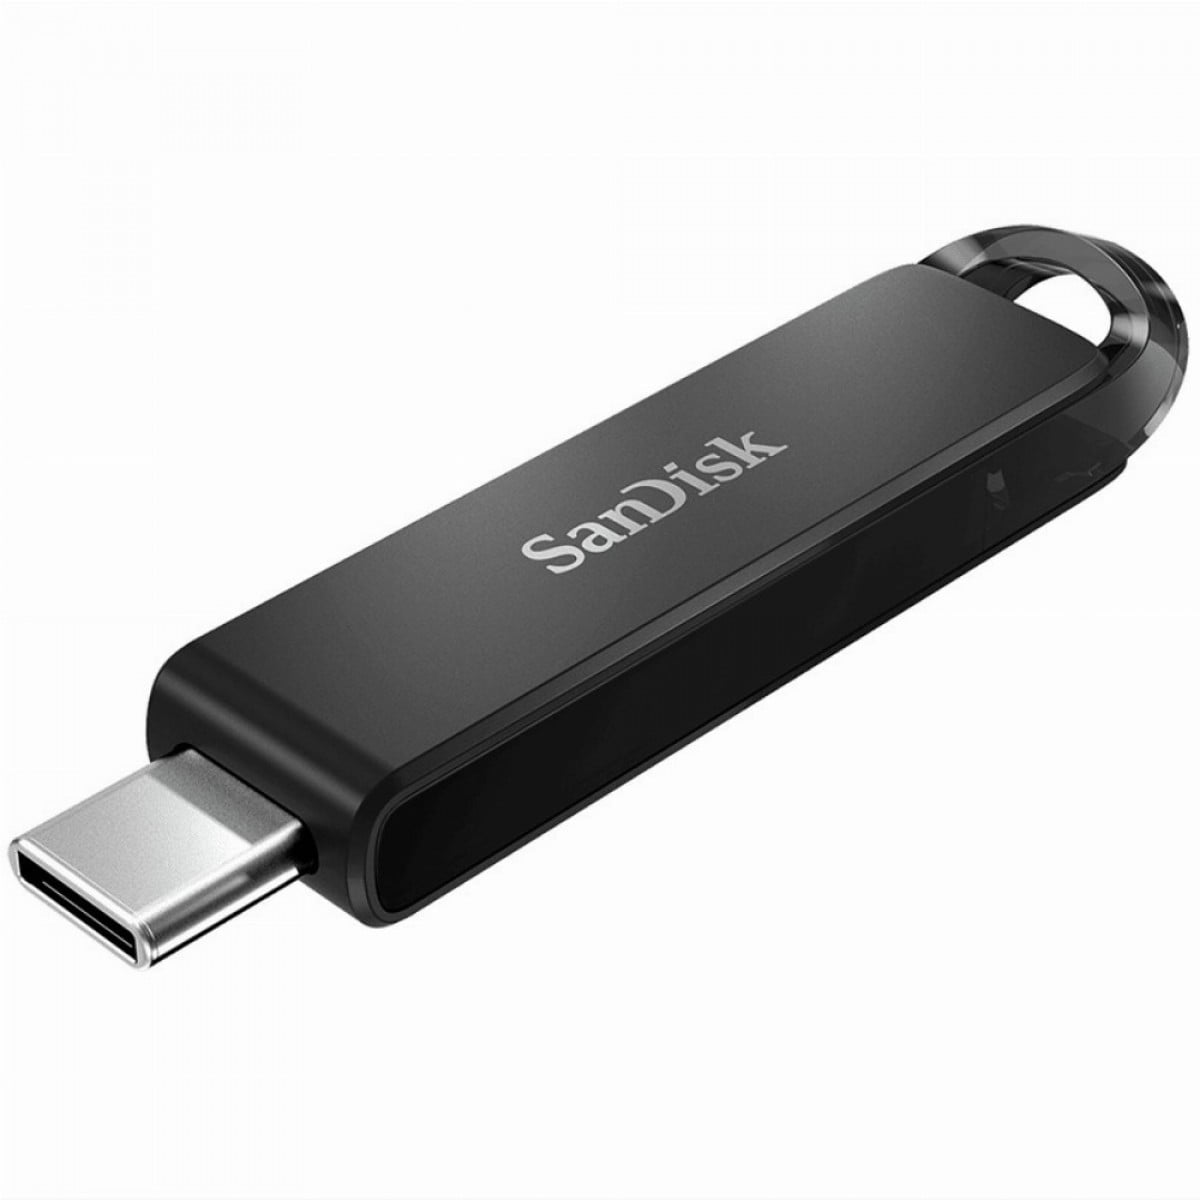  SanDisk – cele mai rapide stick-uri USB